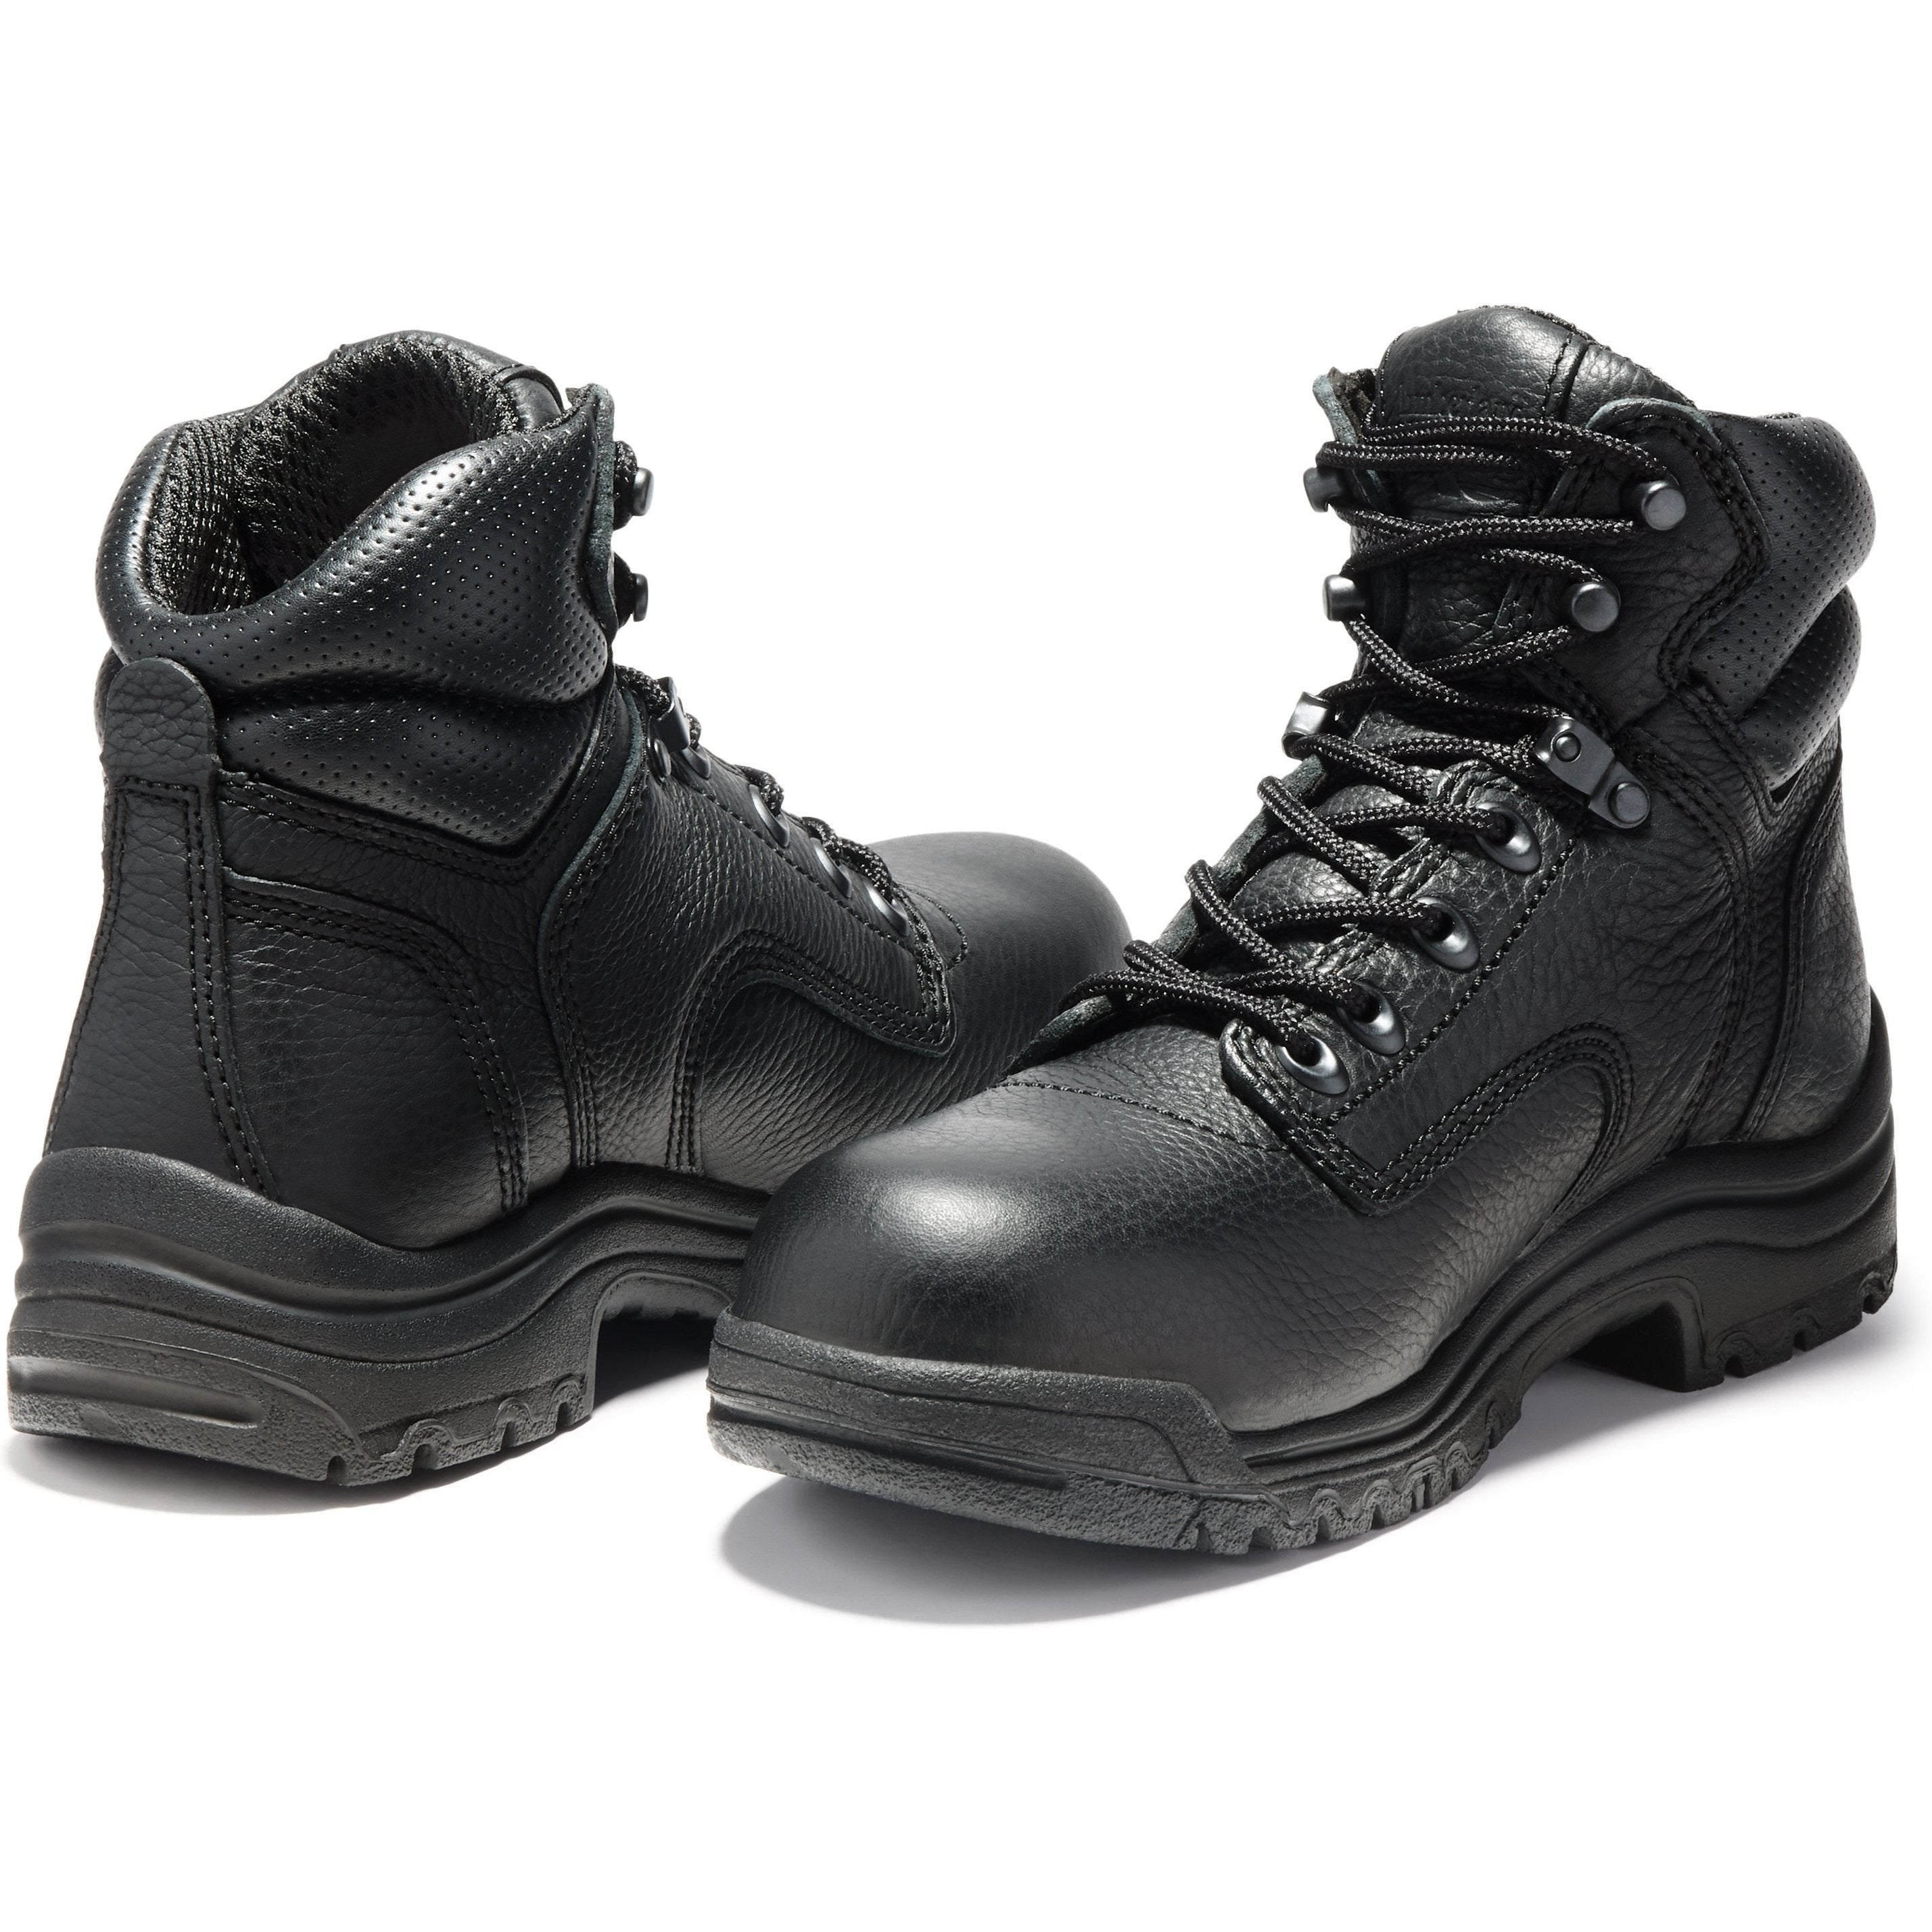 Timberland PRO Women's TITAN 6" Alloy Toe Work Boot Black TB072399001  - Overlook Boots